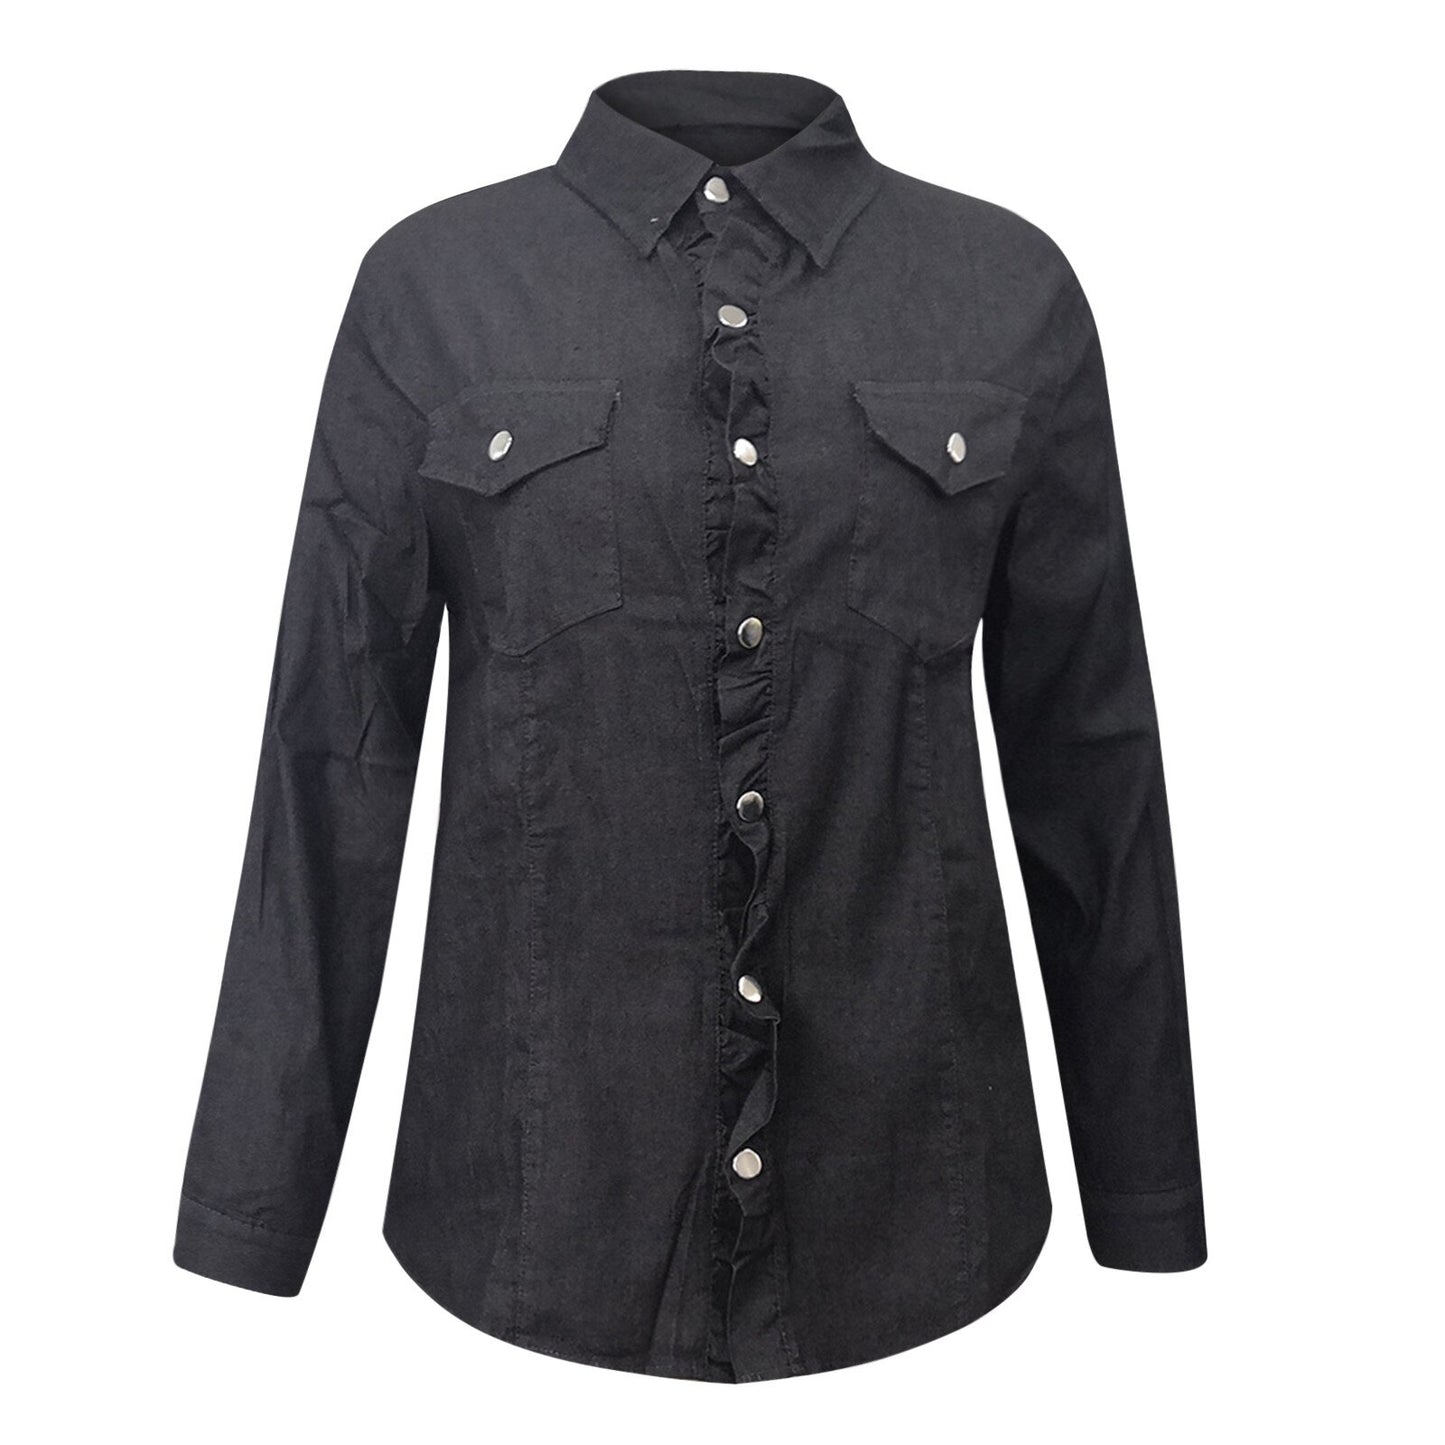 Denim Jacket With Fur Black Jean Jacket Denim Jacket Mid Length Denim Shirt Coat Fashion New Slimming Solid Women Crop Jacket